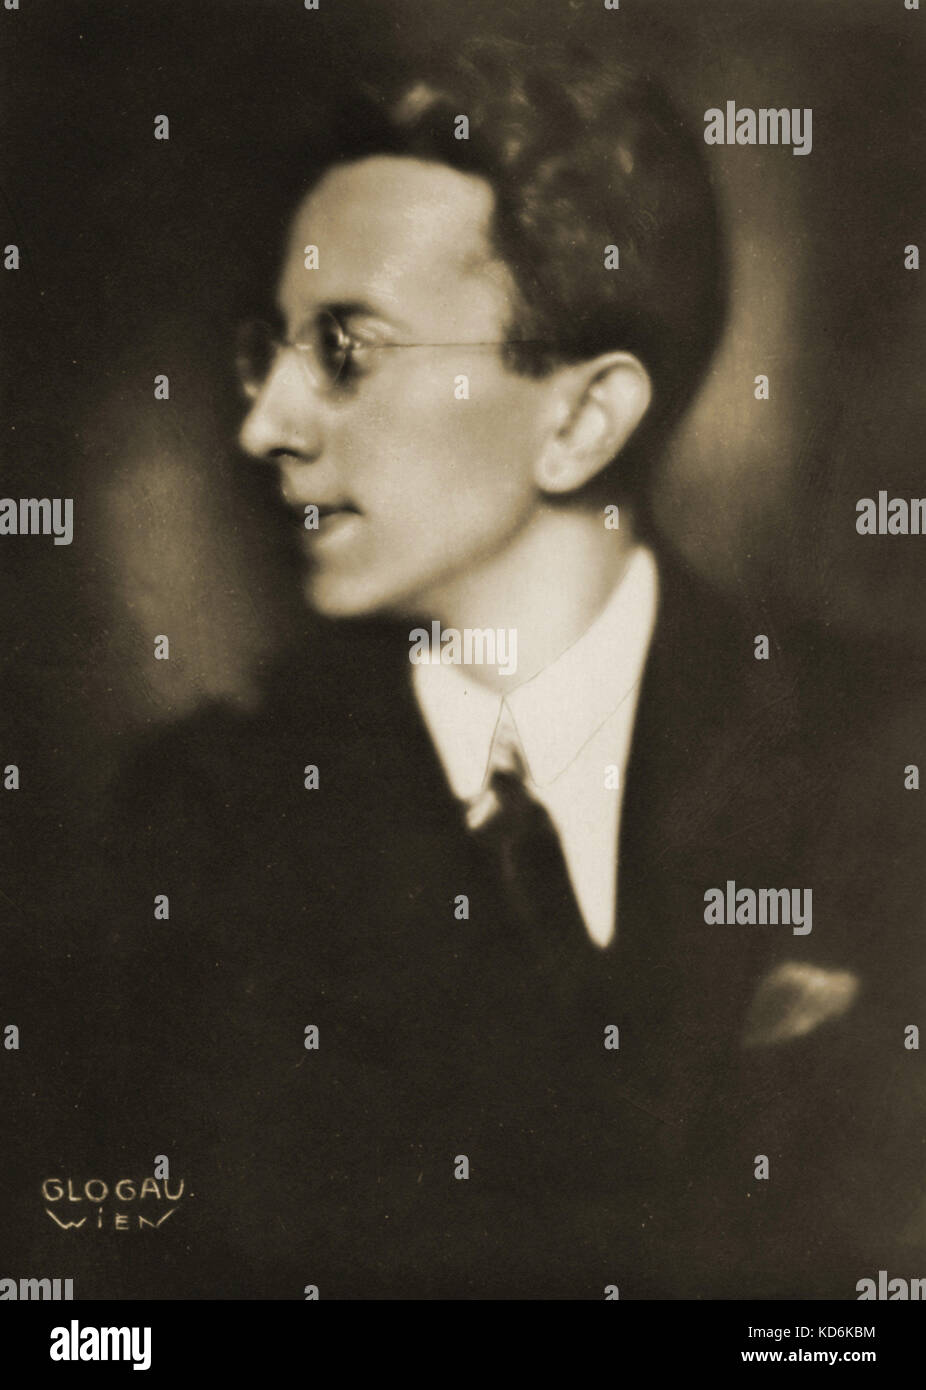 Fritz Mahler, Austrian-American conduttore, 1901-1973. Nipote di Gustav Mahler. Foto scattata da Glogau, Vienna. Foto Stock